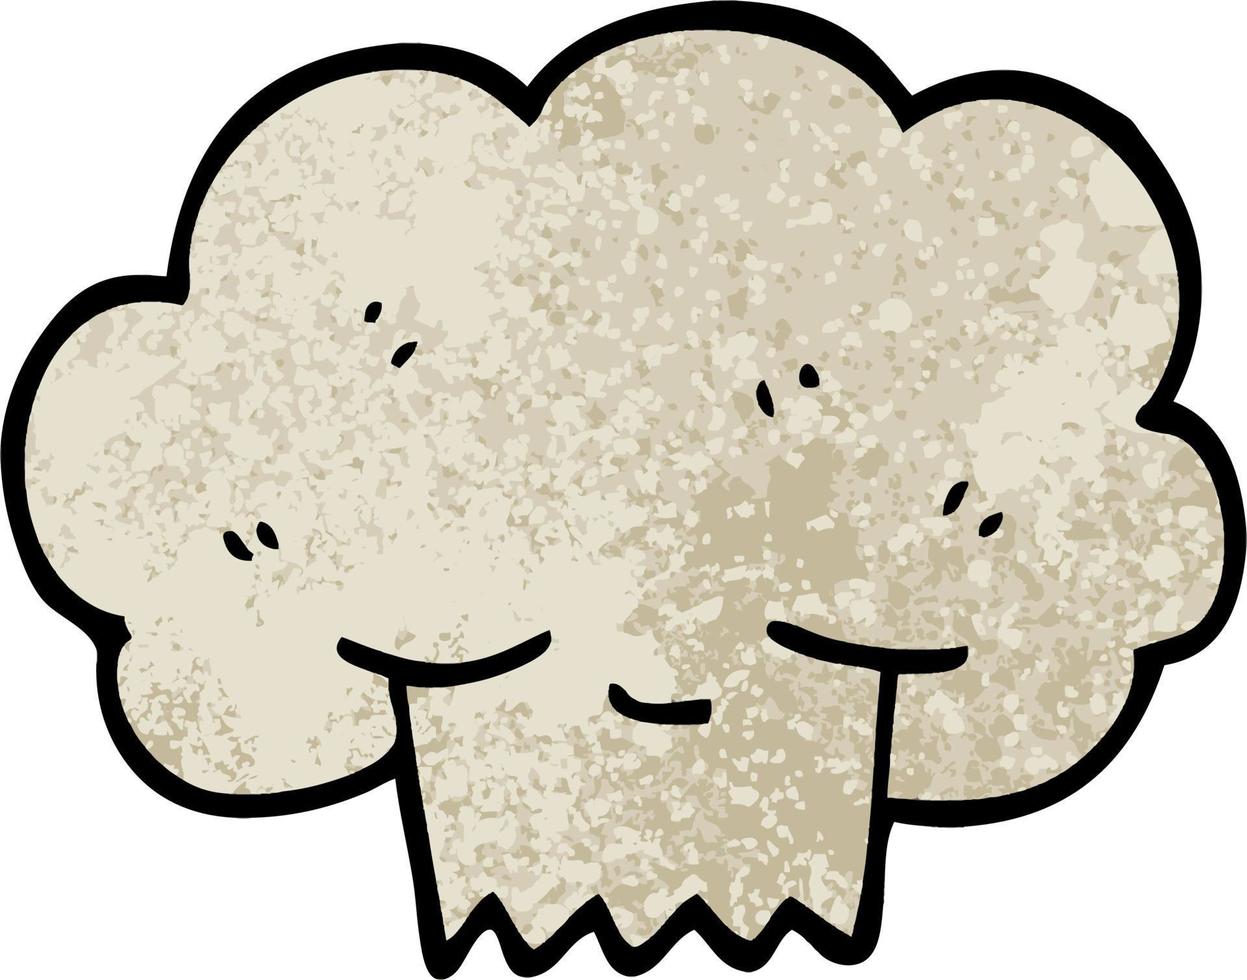 grunge textured illustration cartoon explosion cloud vector